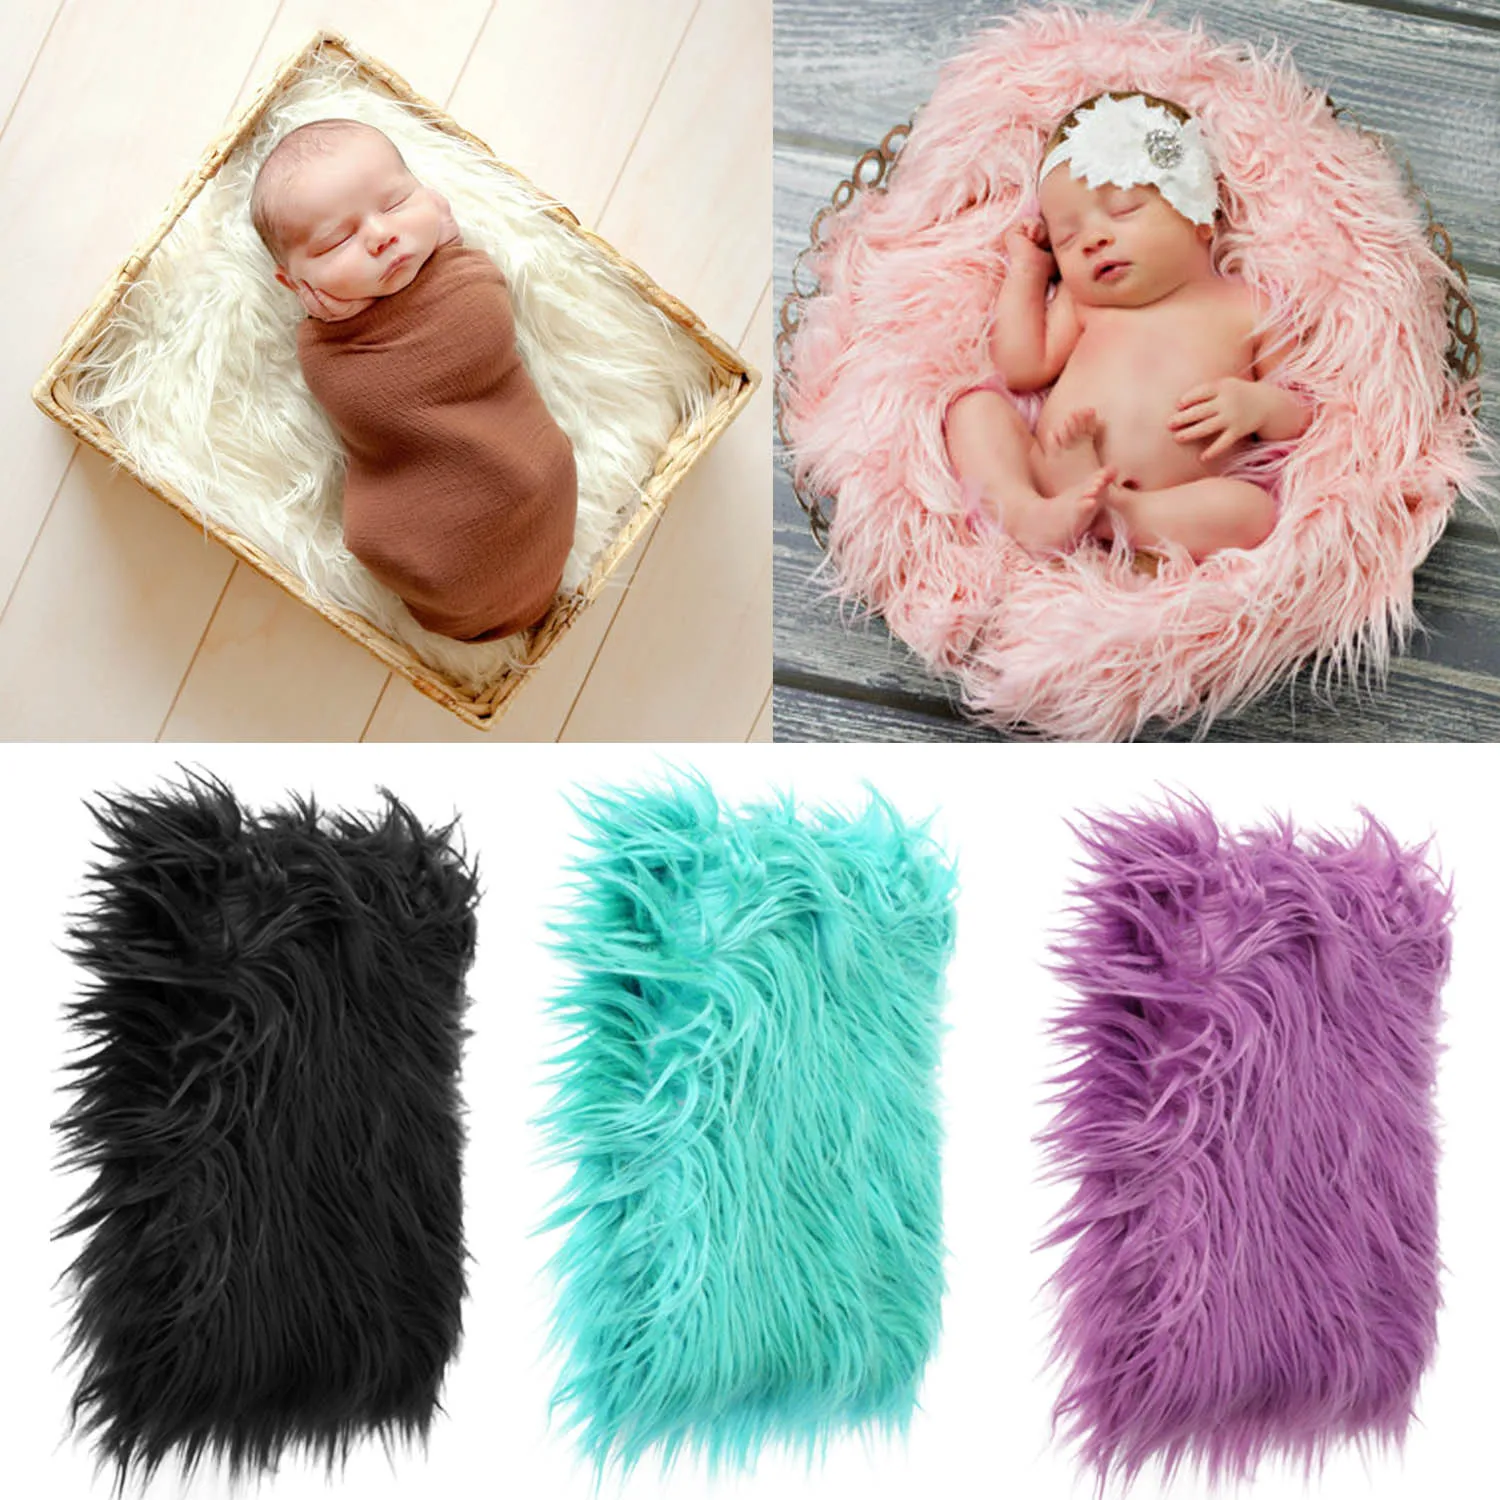 

Behogar 50 x 60cm Newborn Baby Infant Fake Fur Rug Blanket Photography Photo Background Props Basket Stuffer Filler Accessories